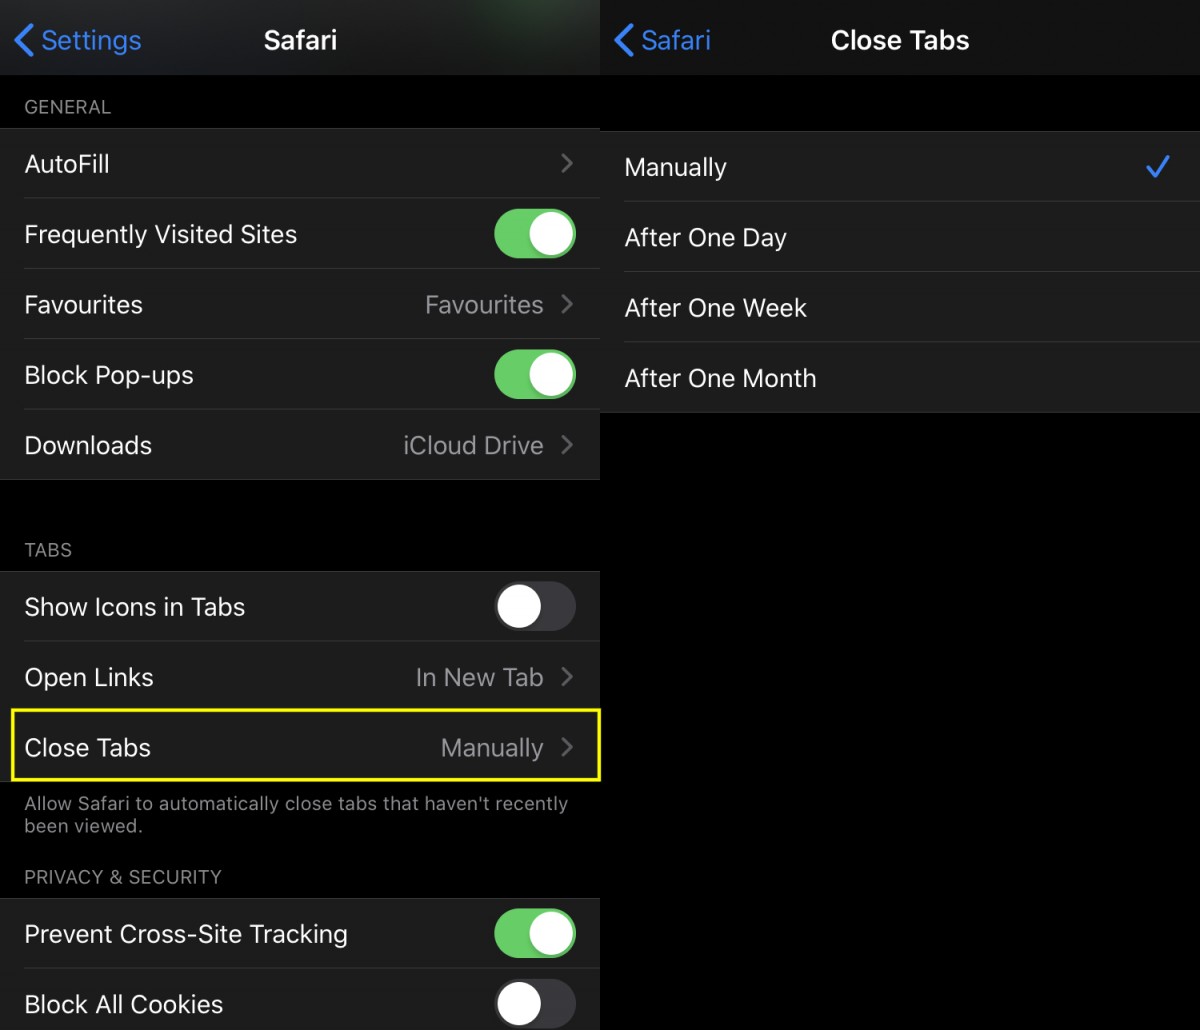 Close Tabs Automatically in Safari on iOS 13